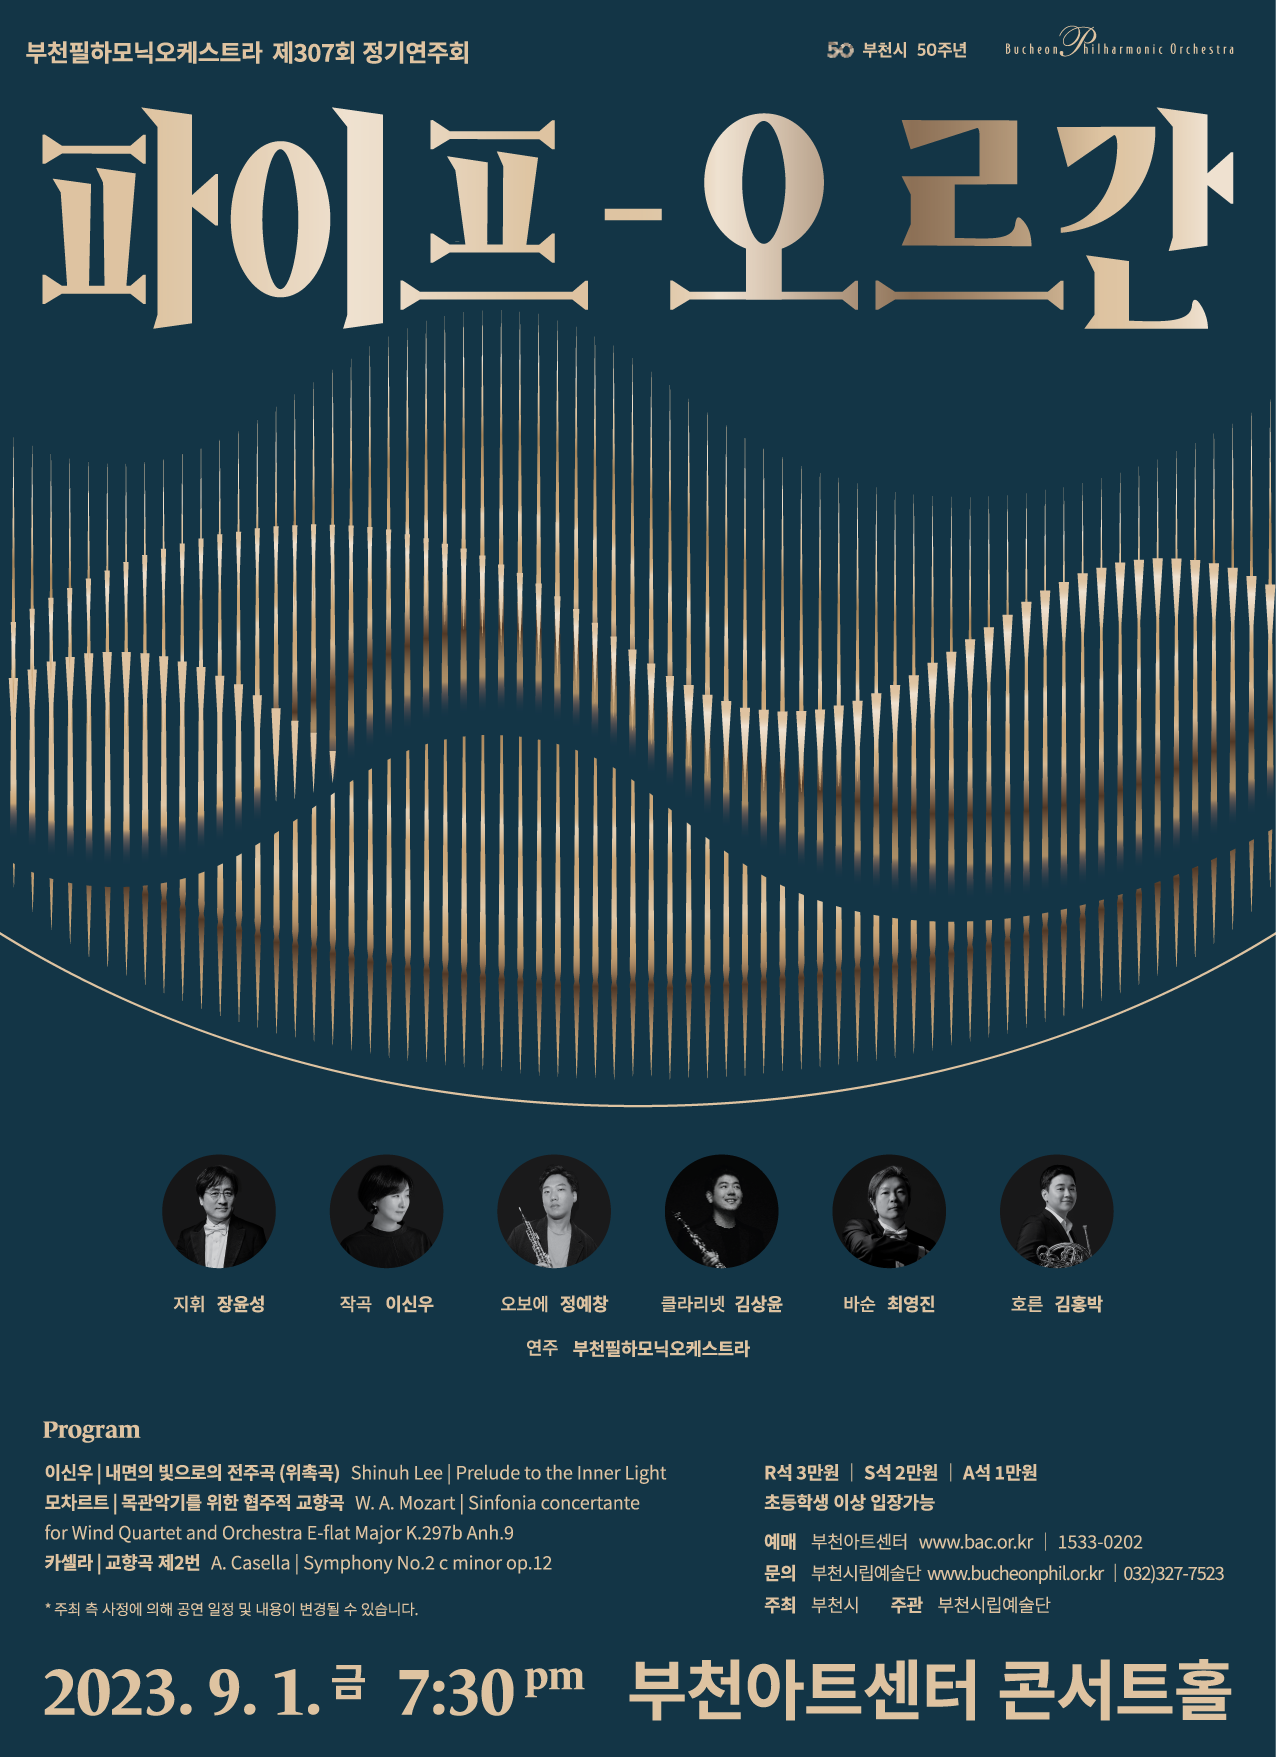 [9.1]Bucheon Philharmonic Orchestra 307th Subscription Concert 'Pipe-Organ' Period 2023-09-01 (Fri)19:30